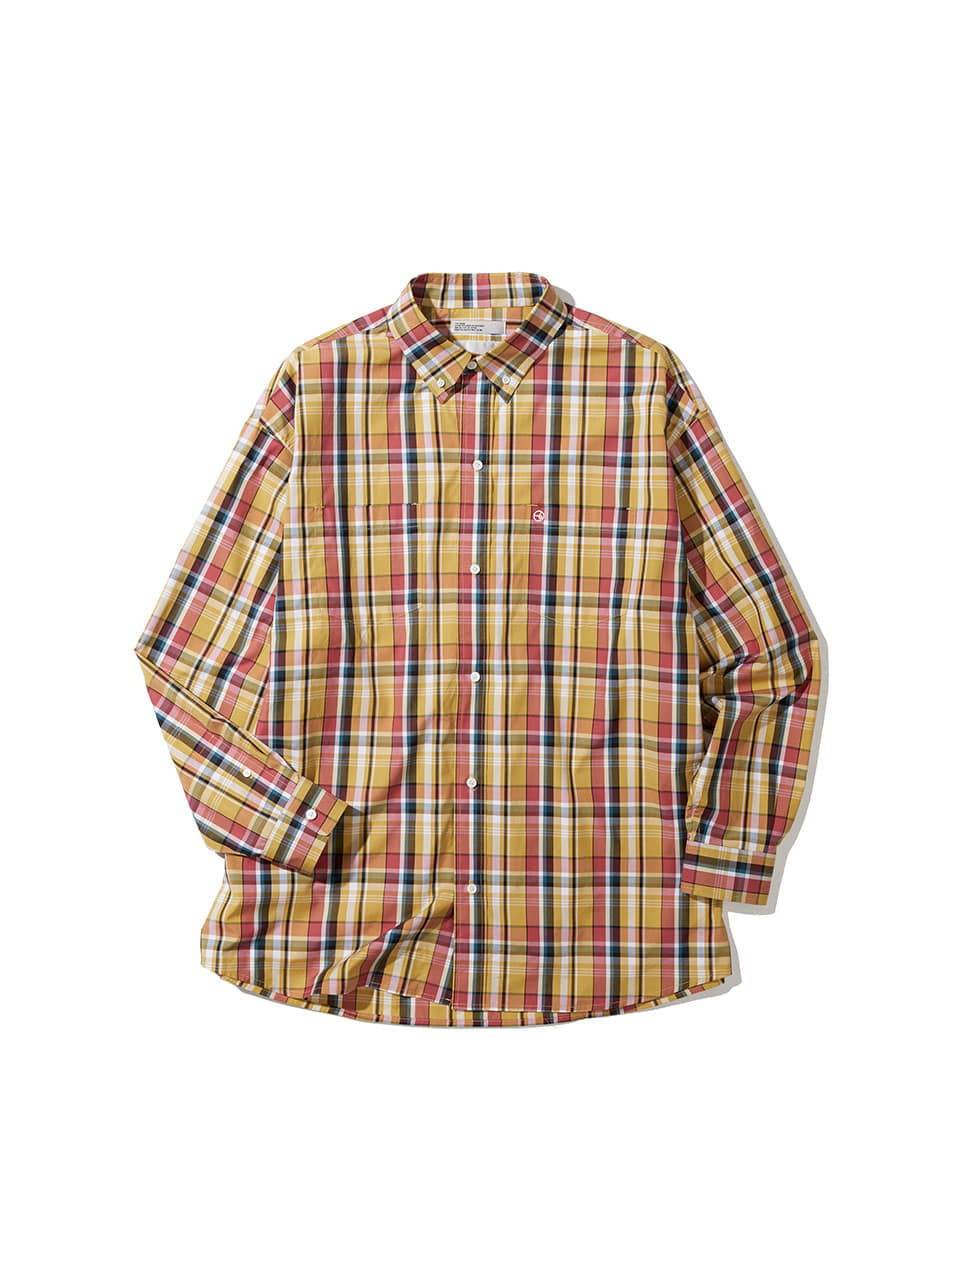 SOUNDSLIFE - Back Loop Two Pocket Multi Check Shirt Yellow